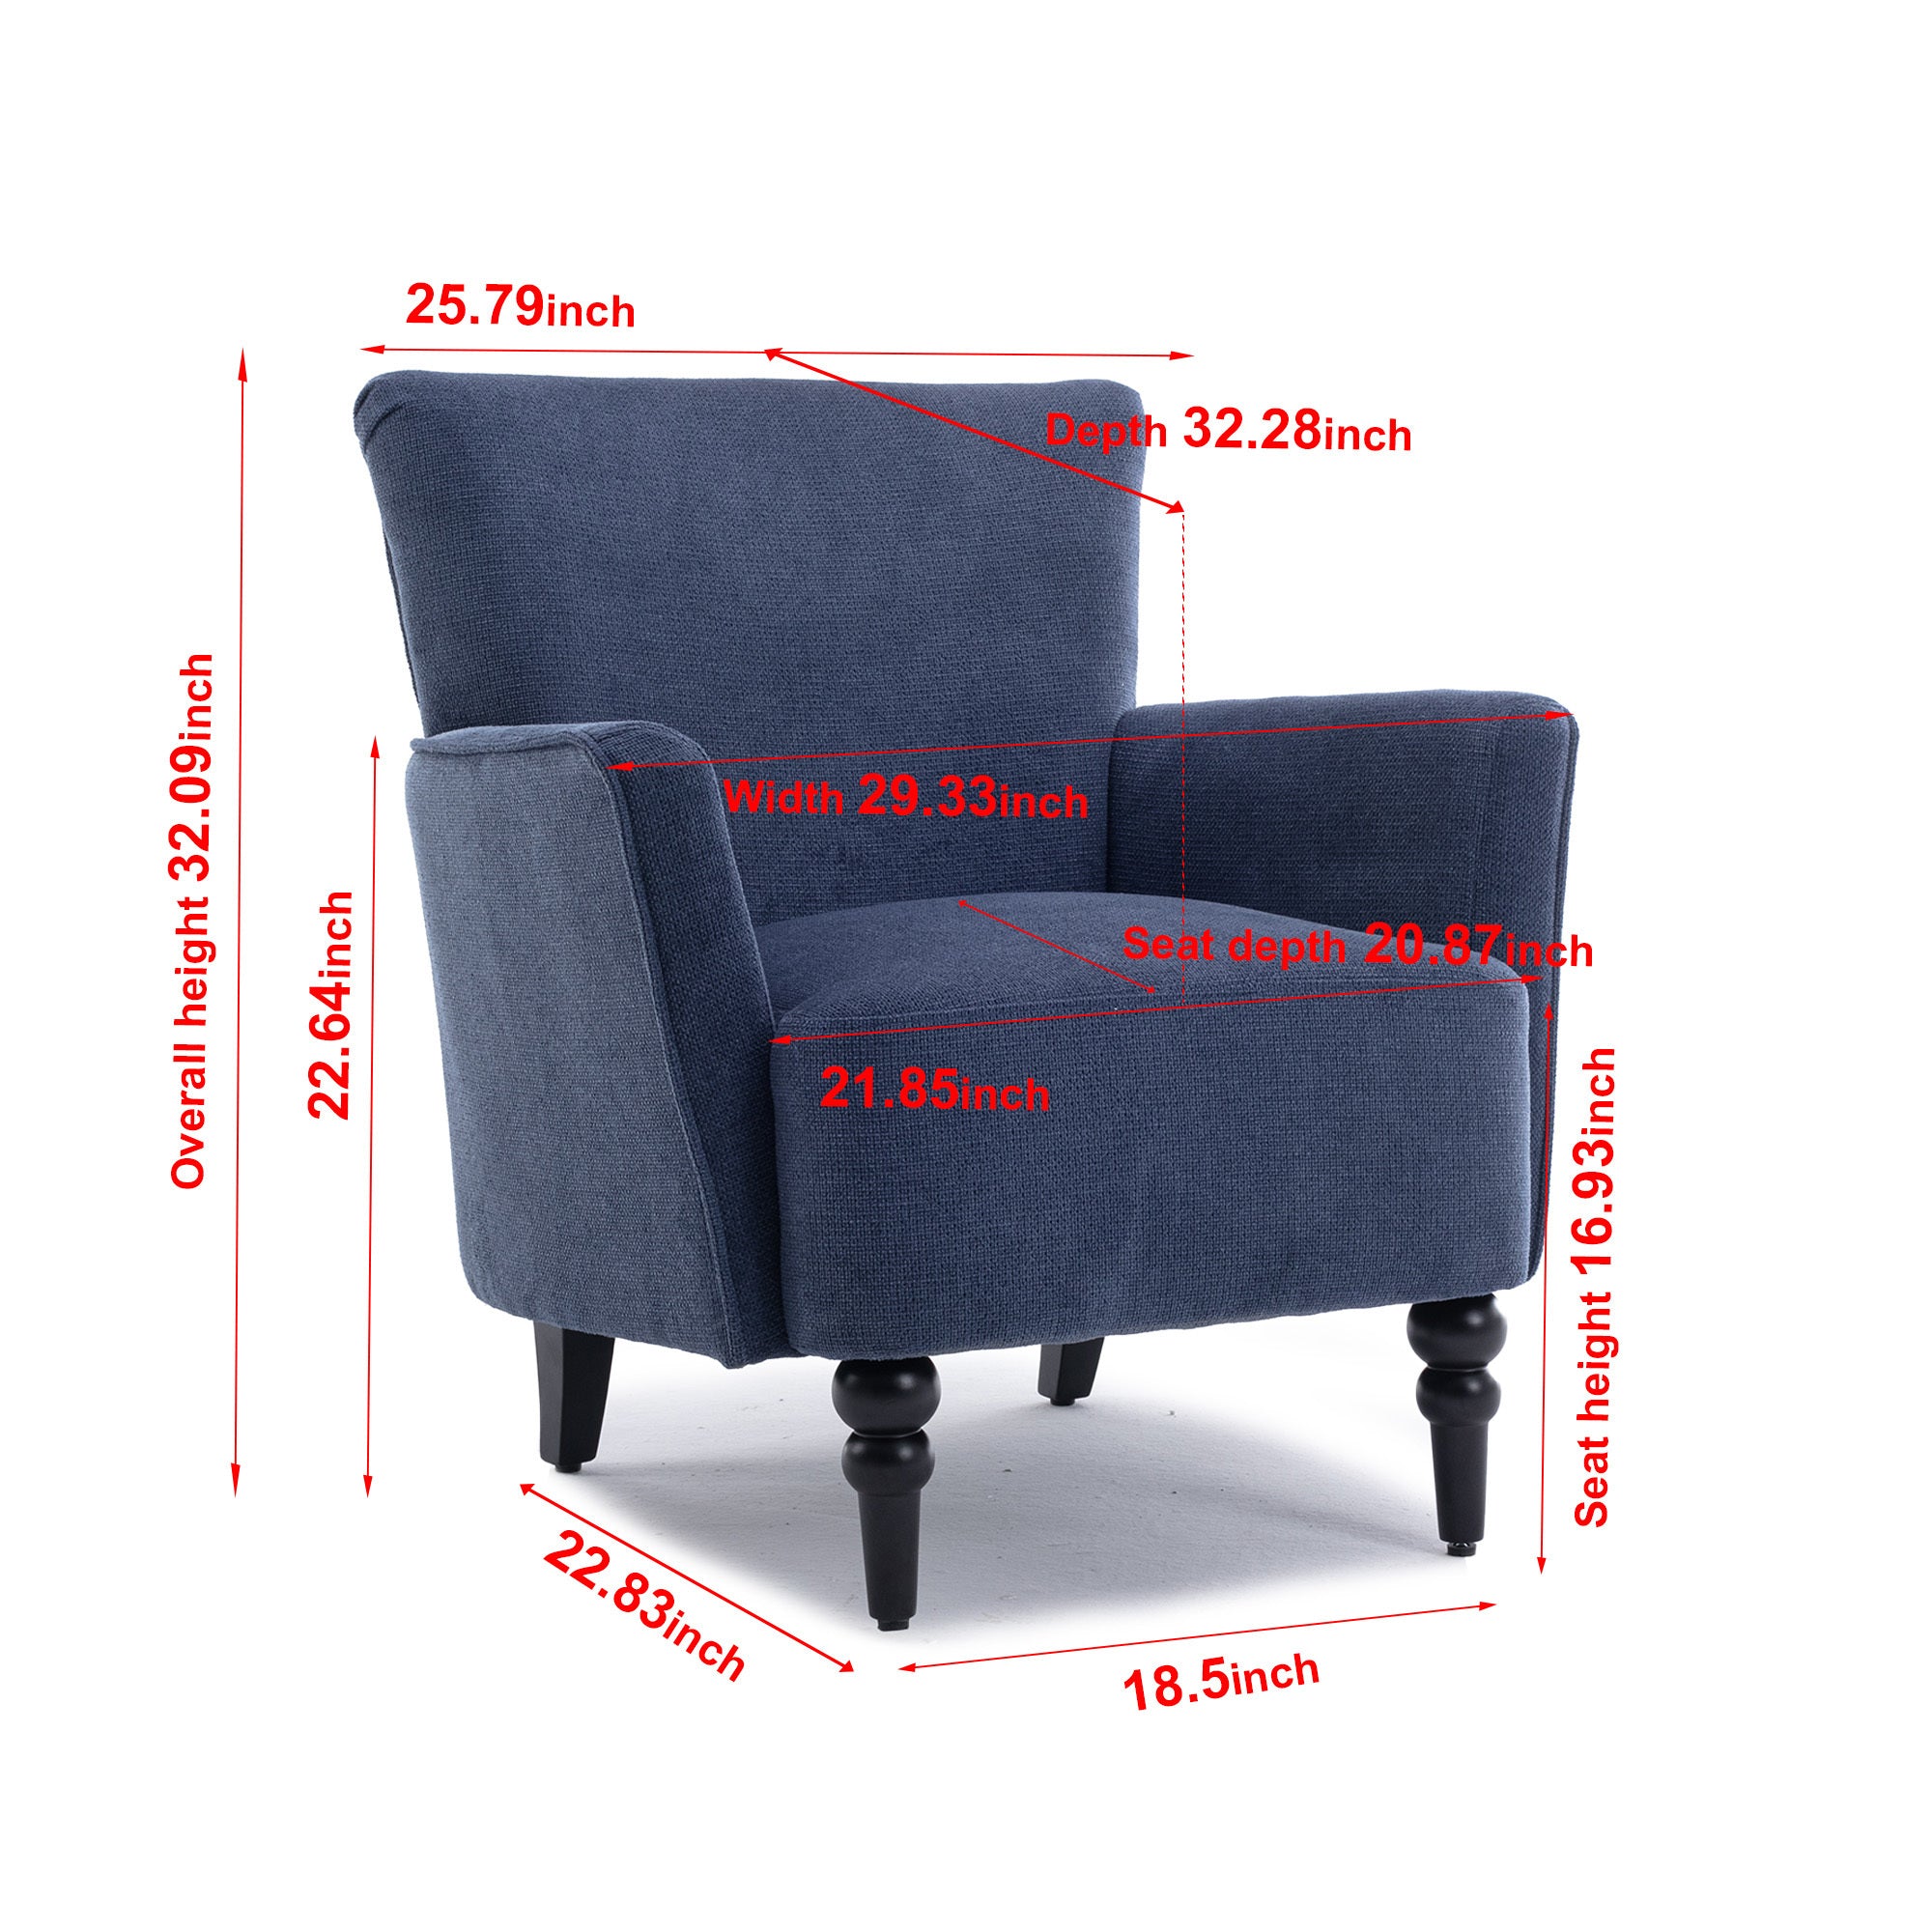 Olivia Blue Linen Accent Arm Chair